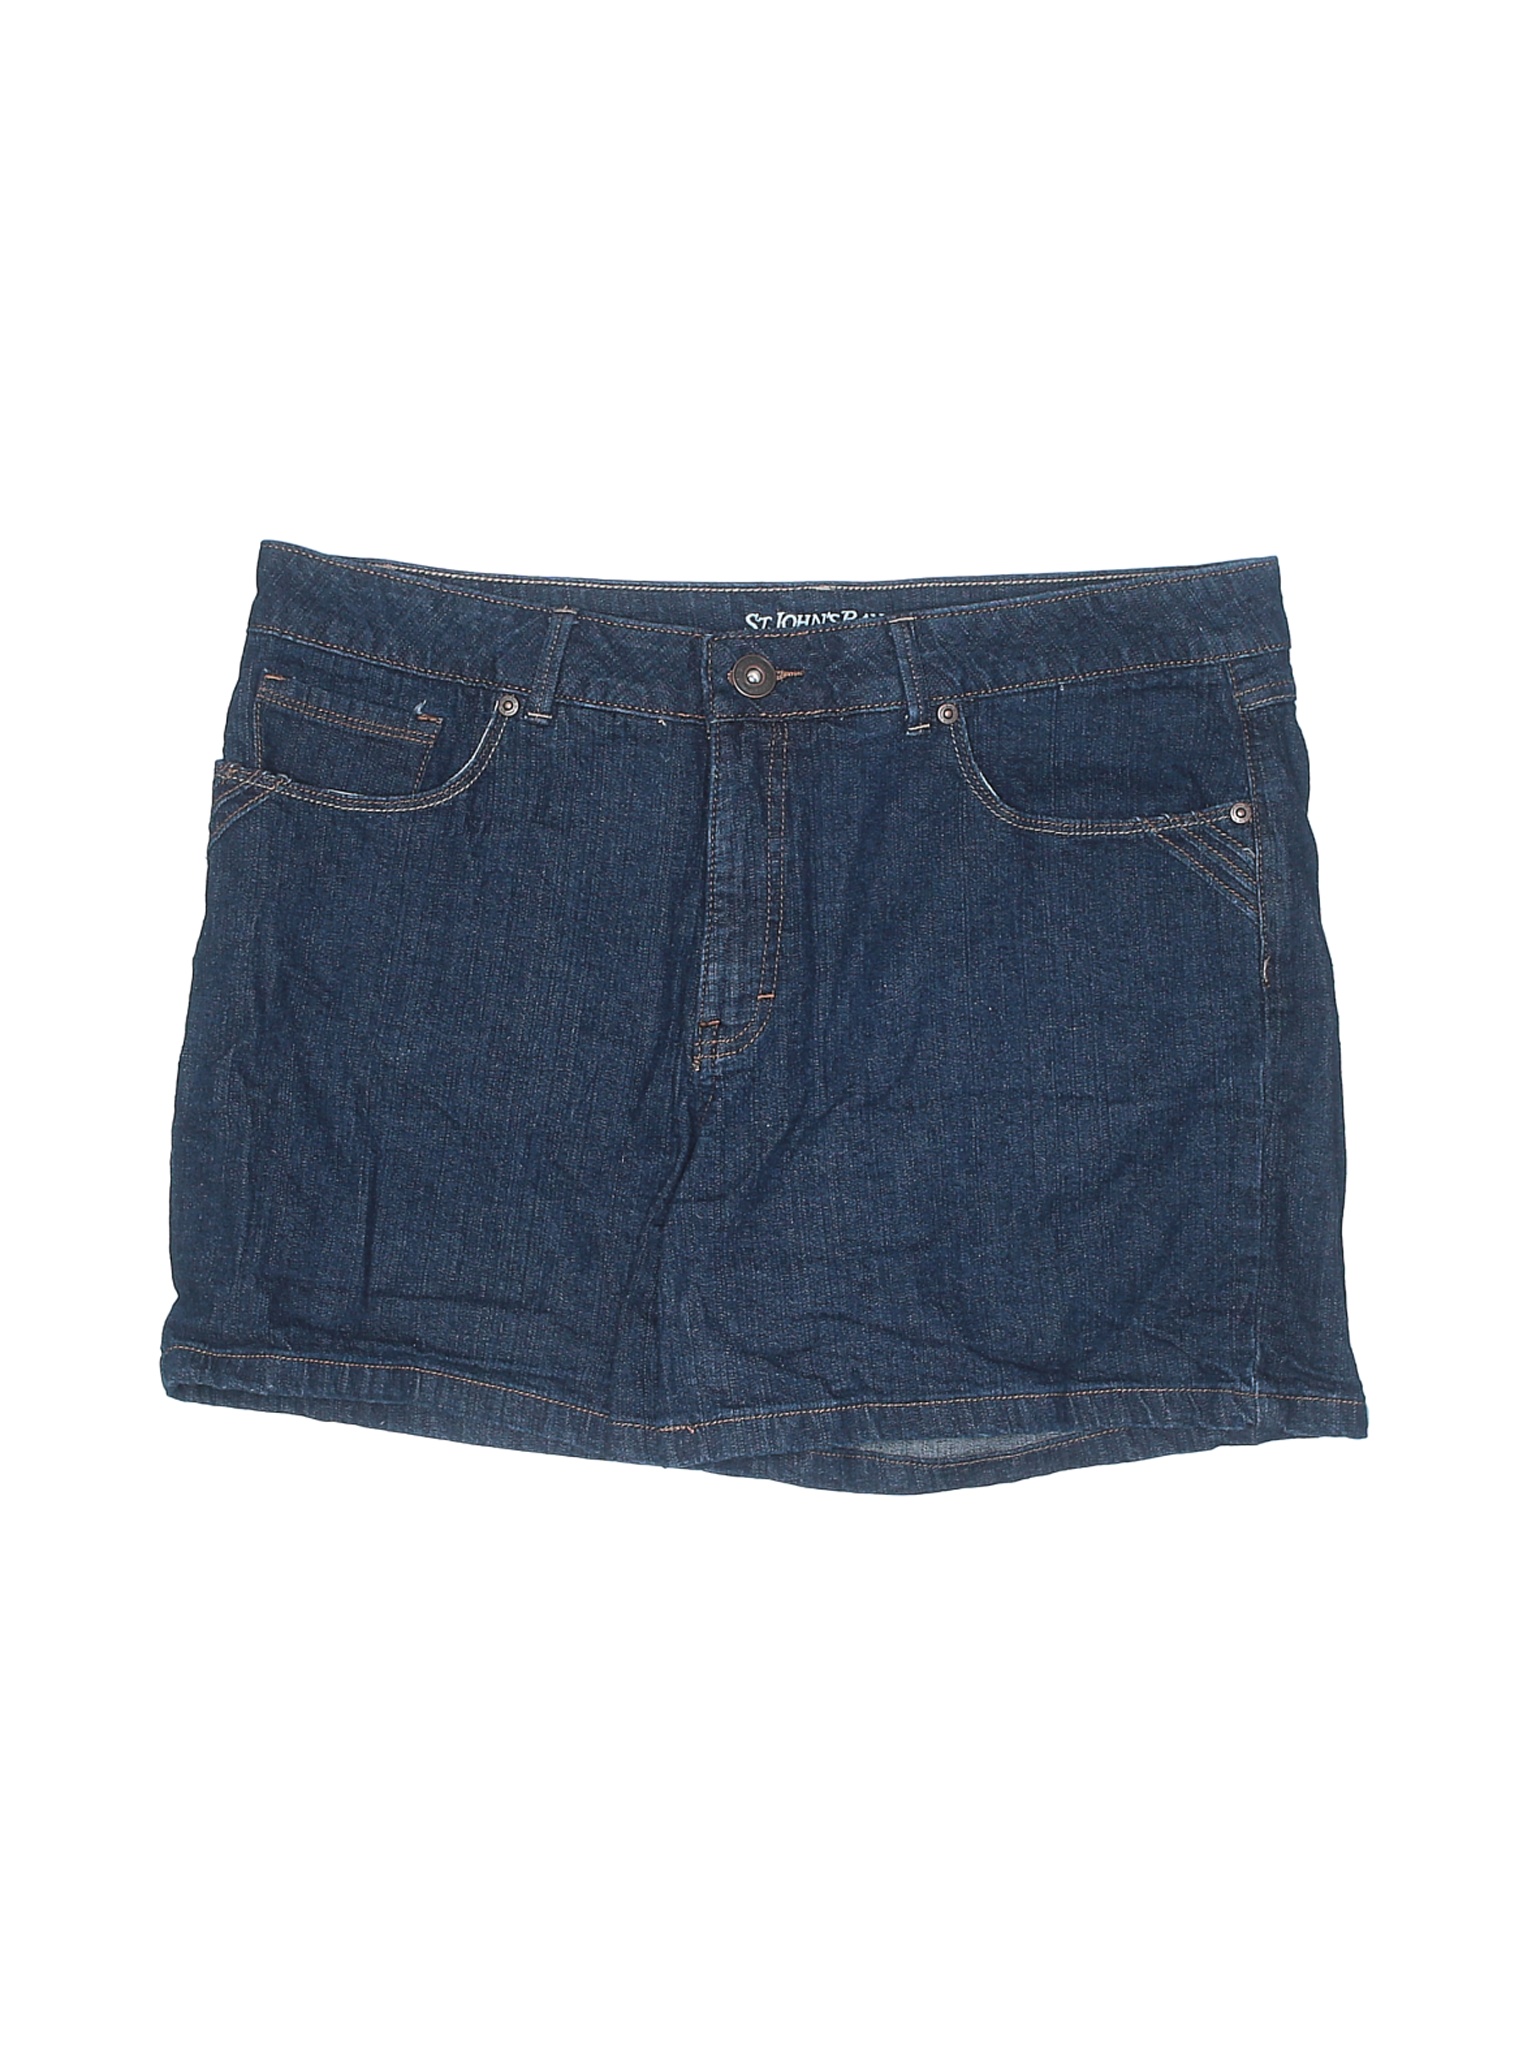 St. John's Bay Women Blue Denim Shorts 16 | eBay